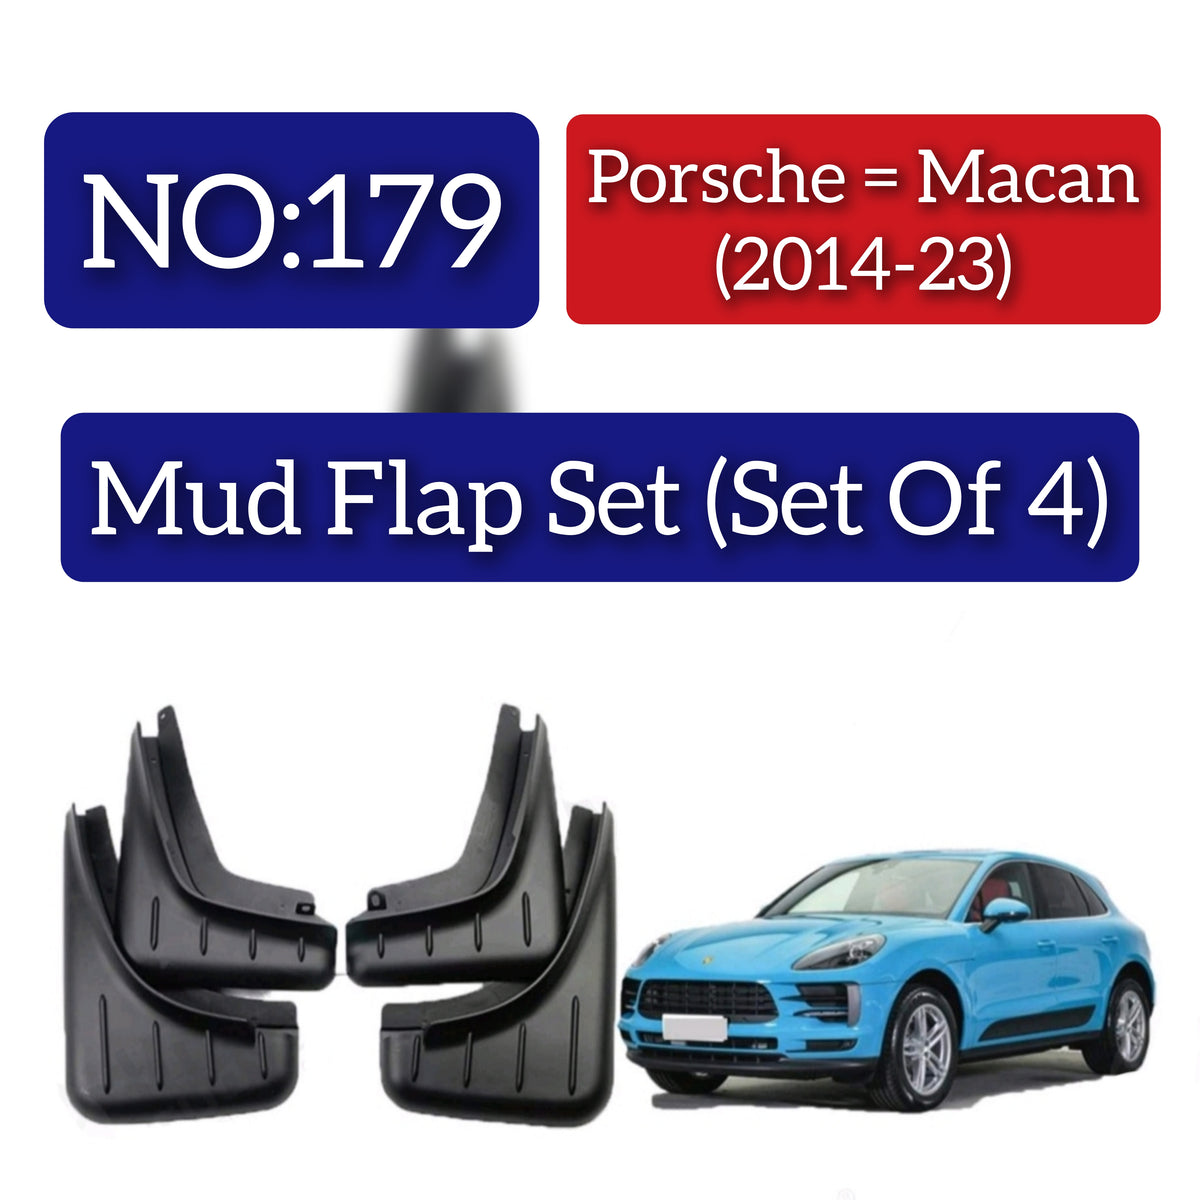 Porsche Macan (2014-23) Mud Flap Set (Set of 4)  Tag 179